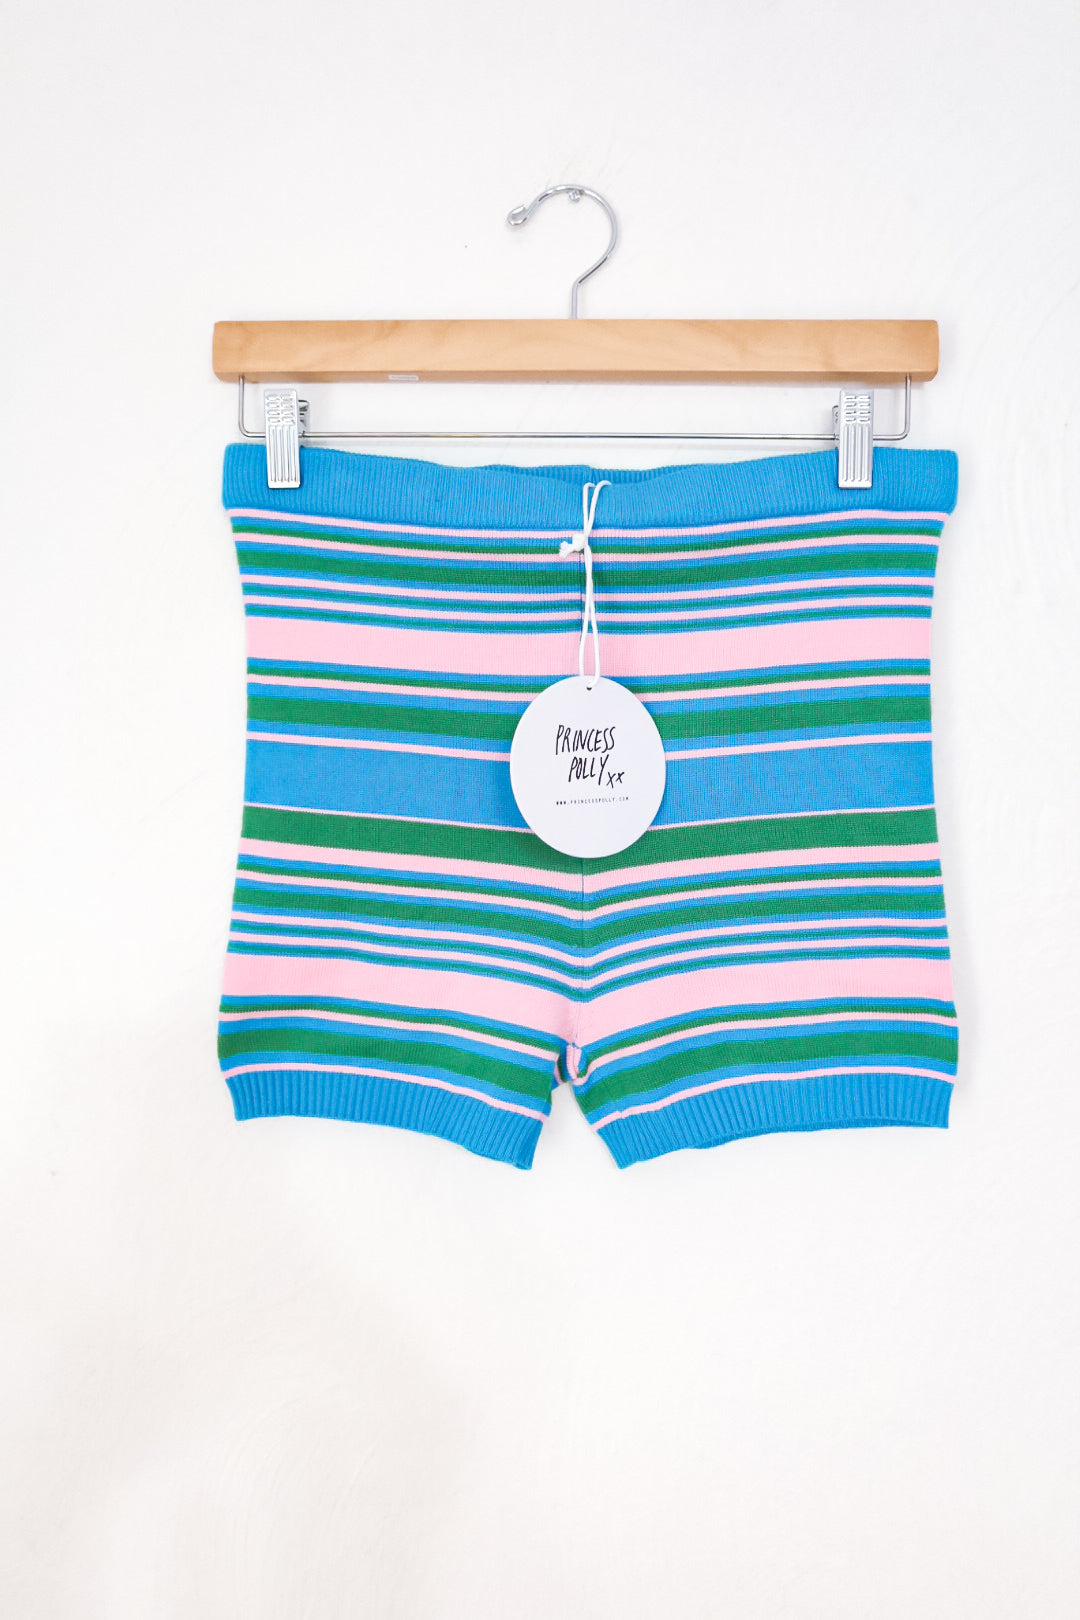 Princess Polly Knit Shorts (L/XL) New with tags!